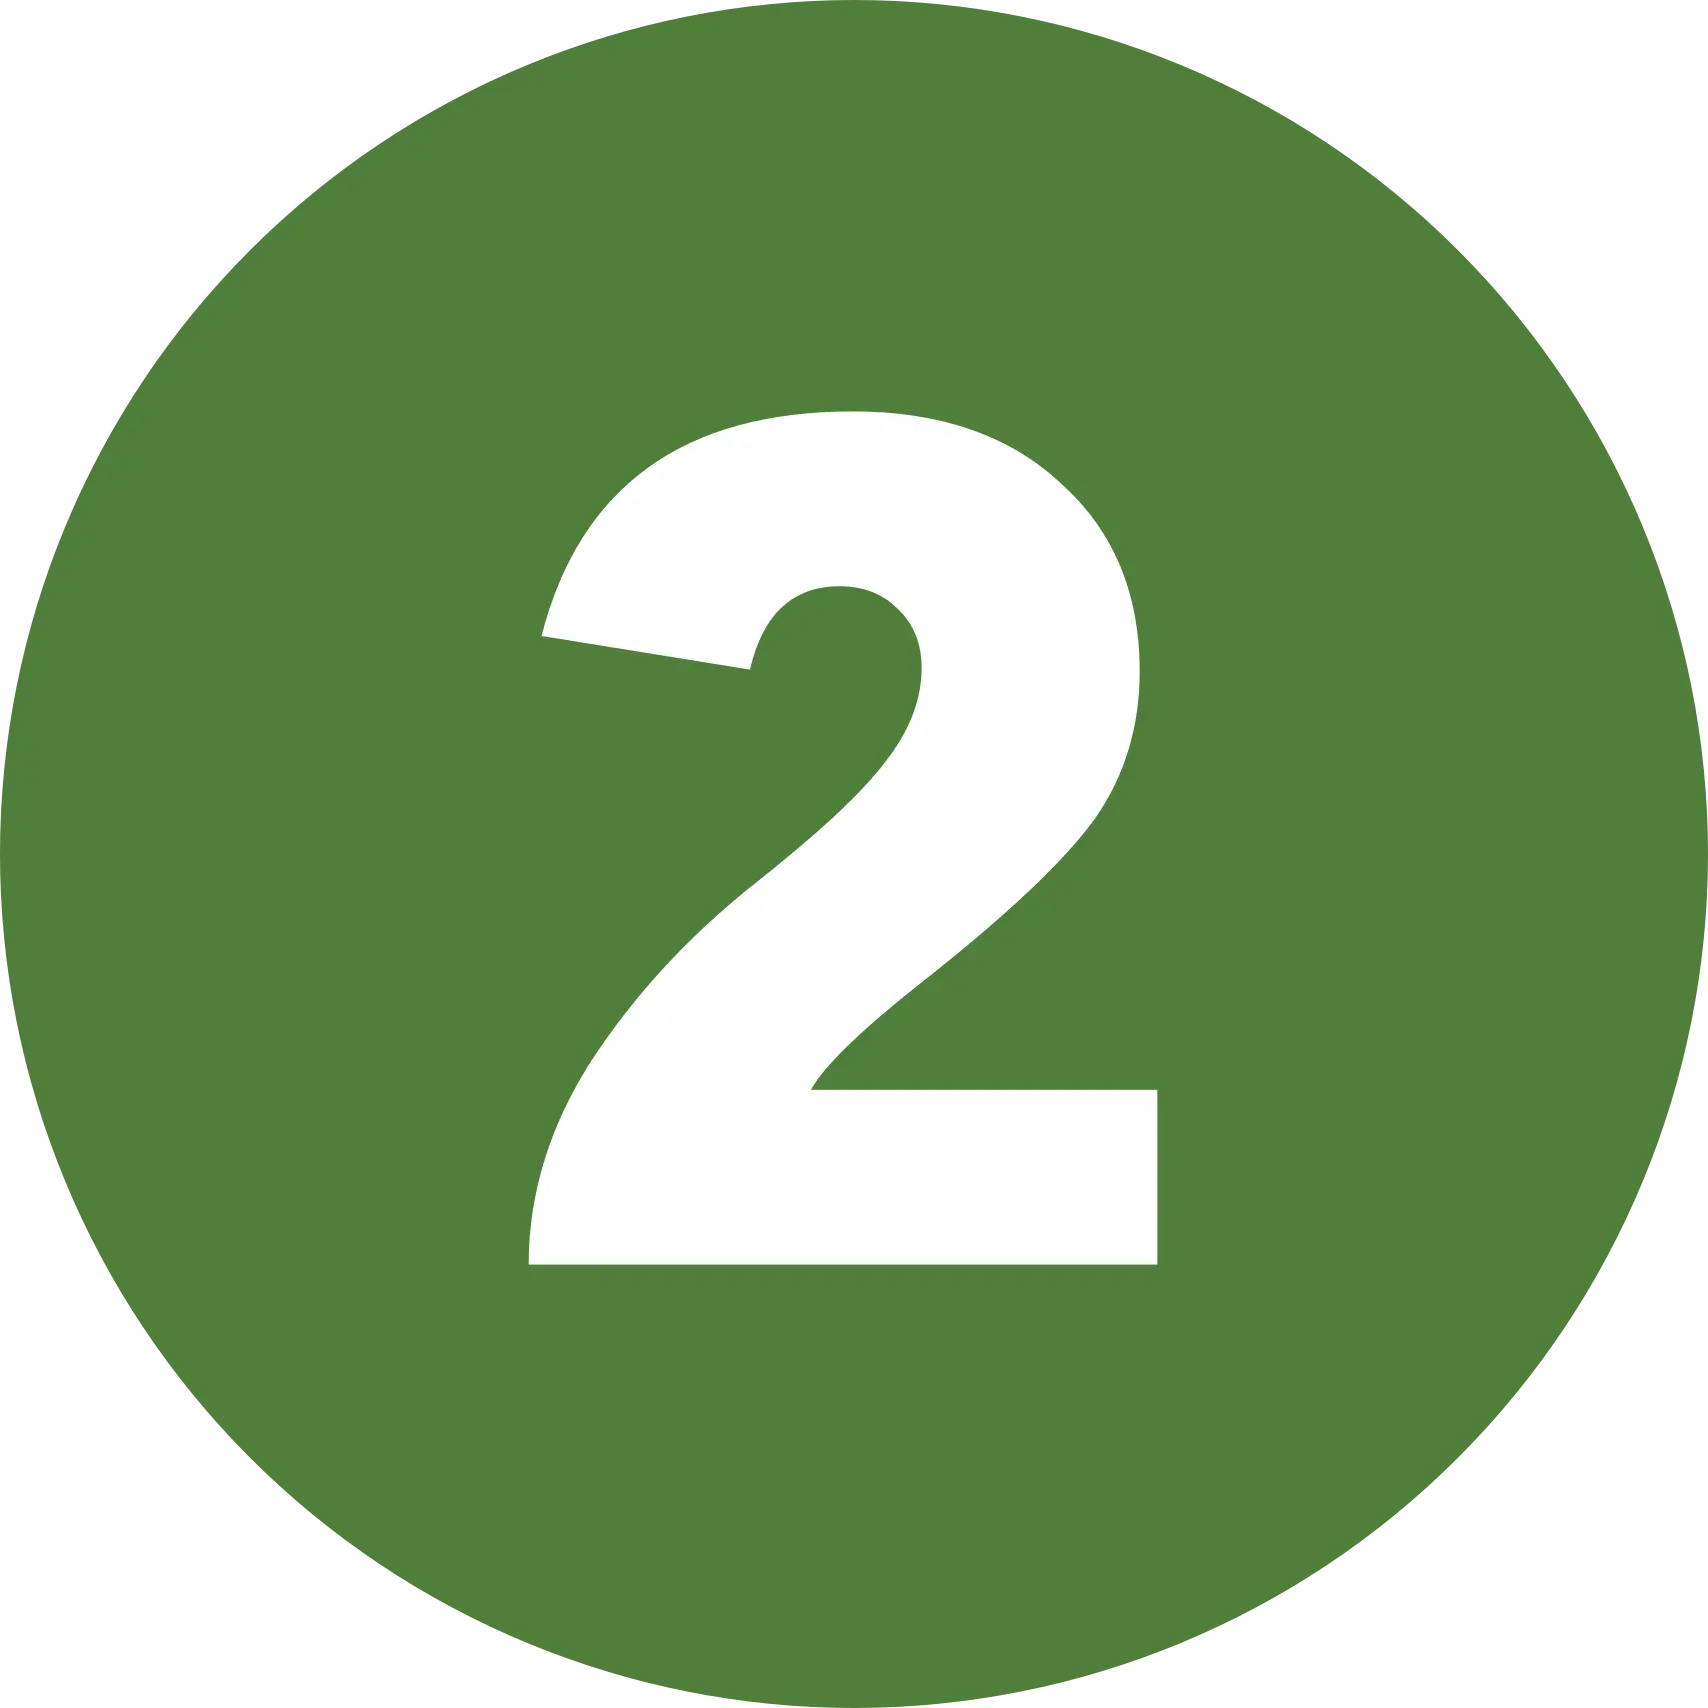 2 green